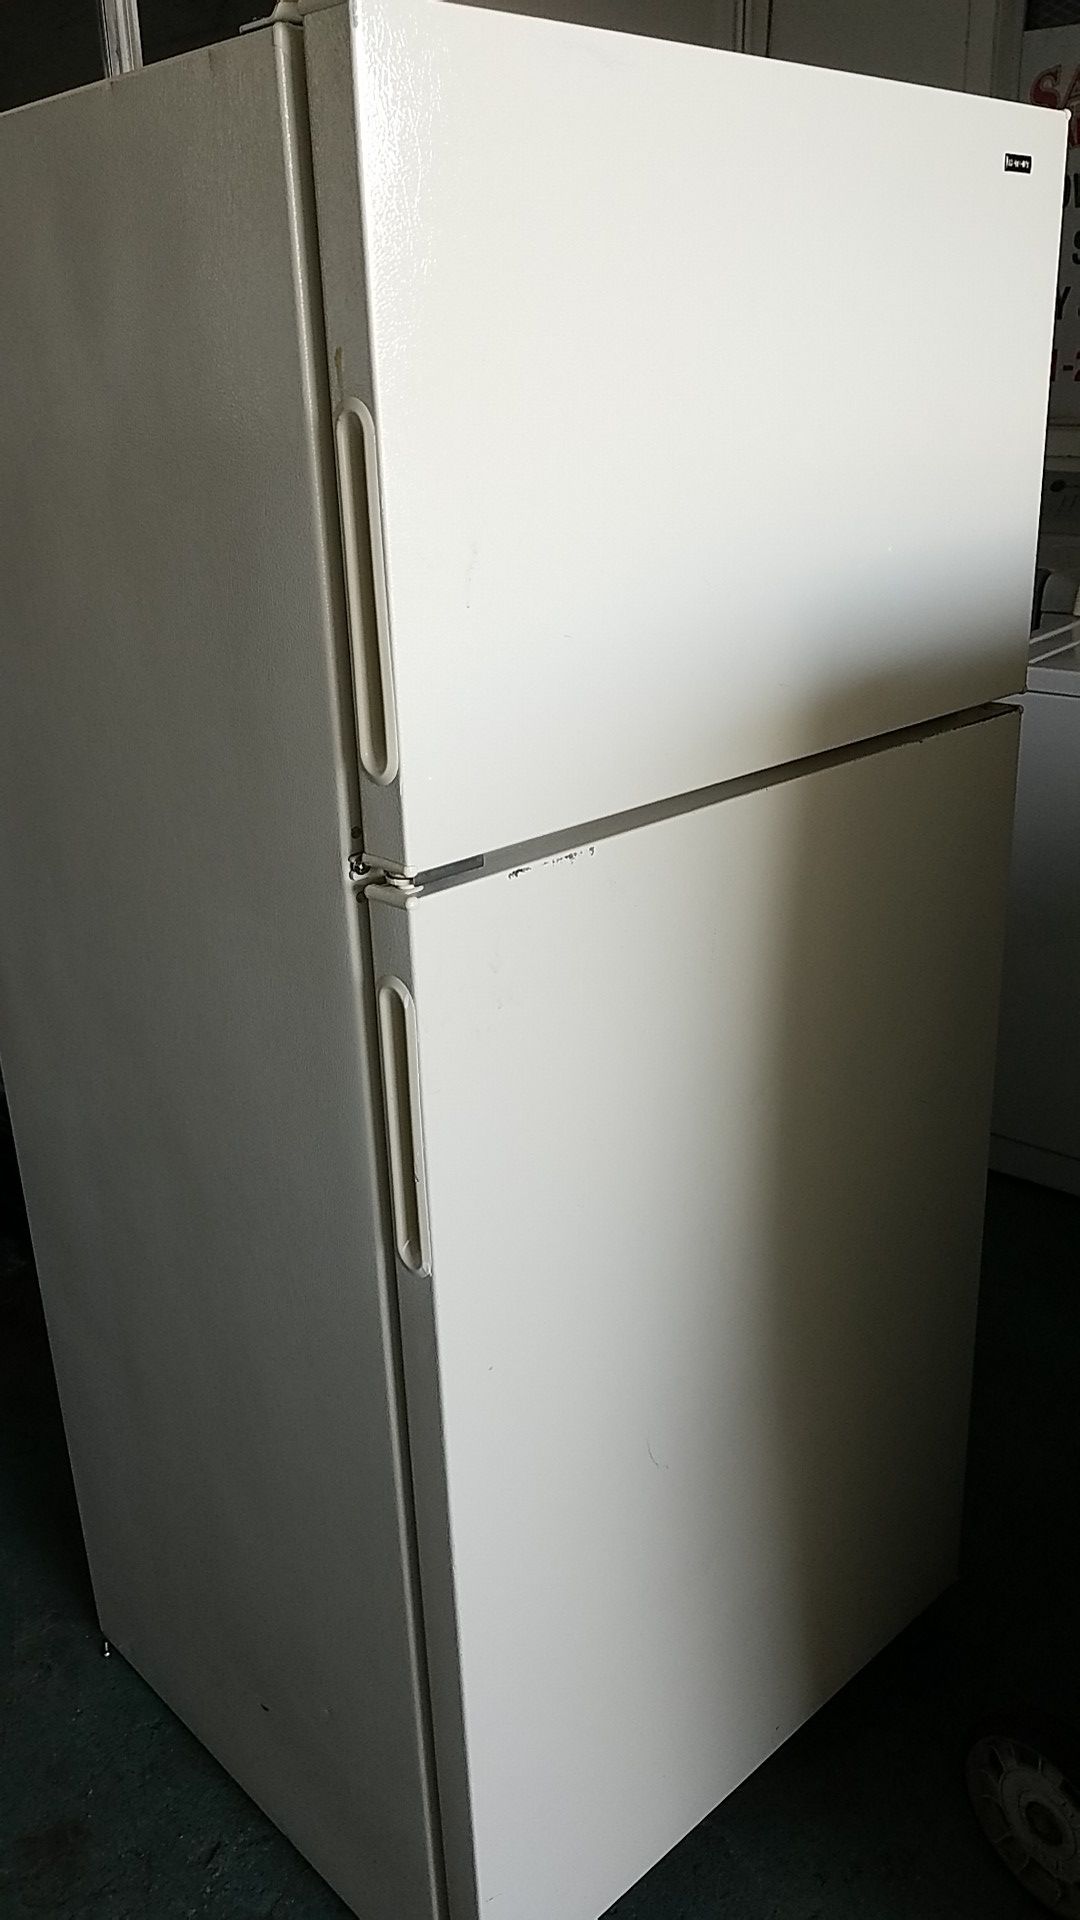 Small refrigerator almond color